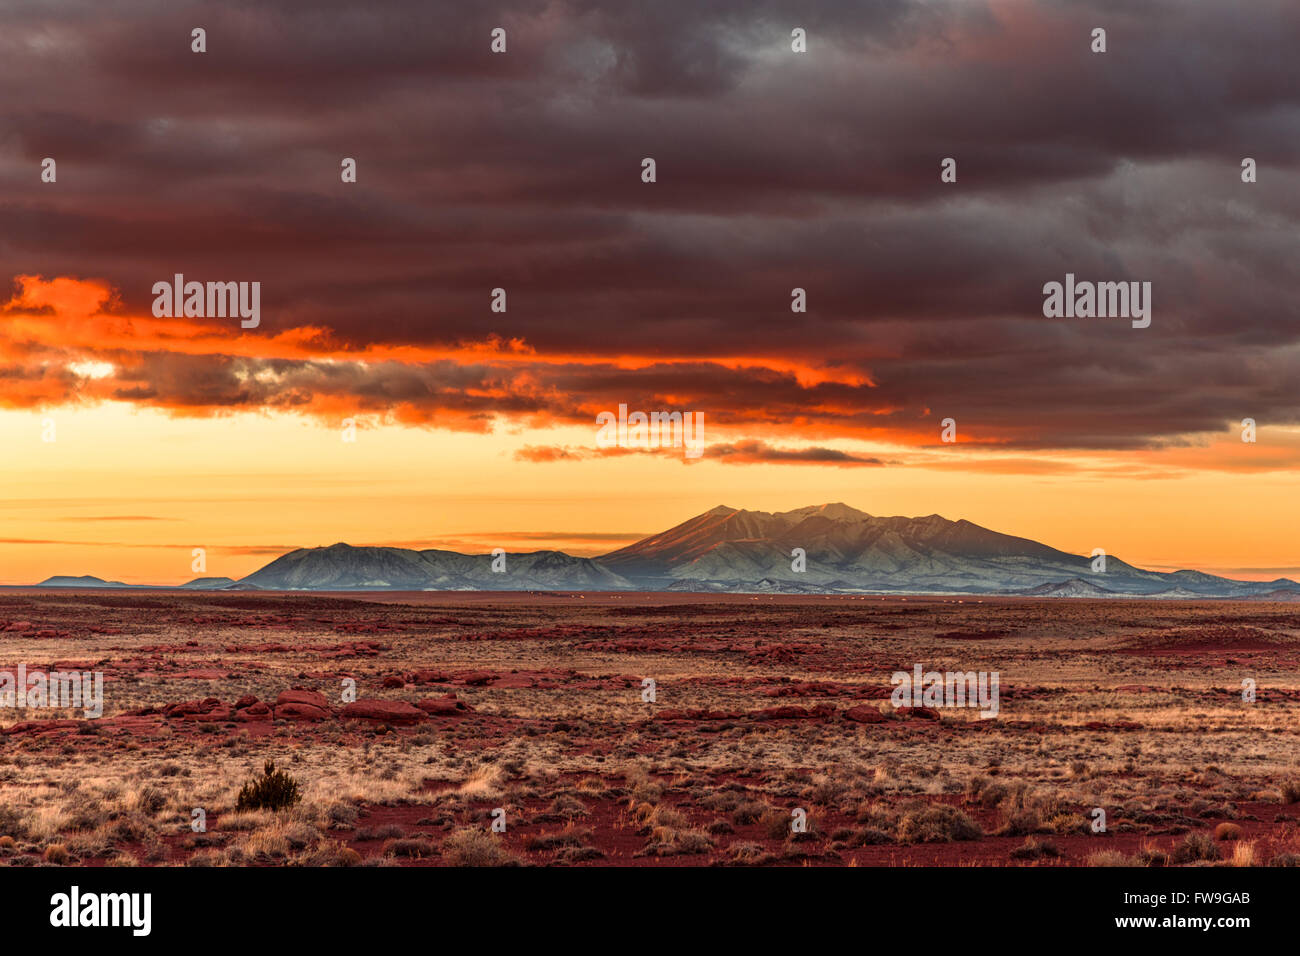 Colorful sunset sky over the San Francisco Peaks mountain range near Flagstaff, Arizona Stock Photo